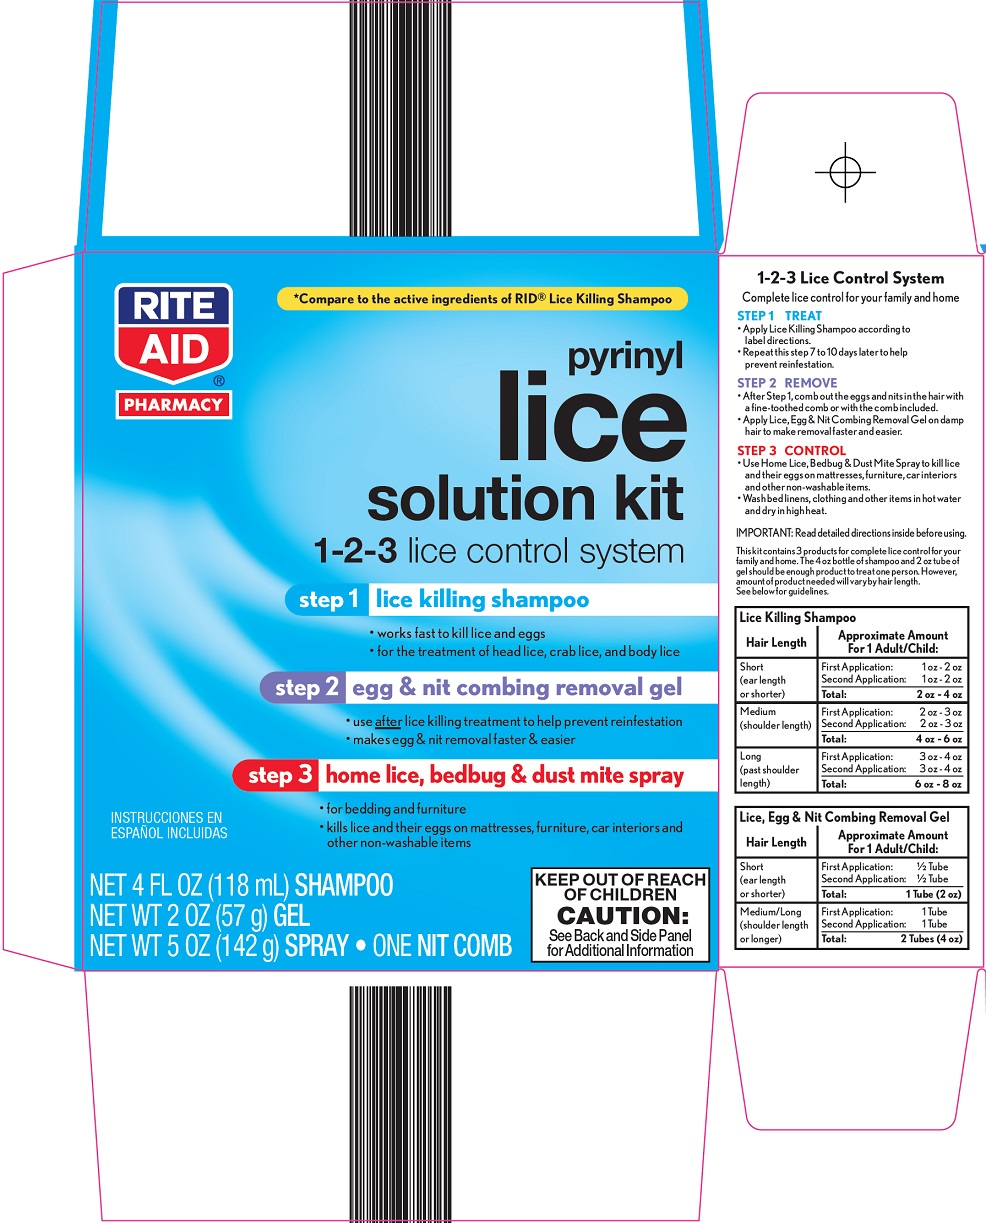 Lice Solution Kit Image 1